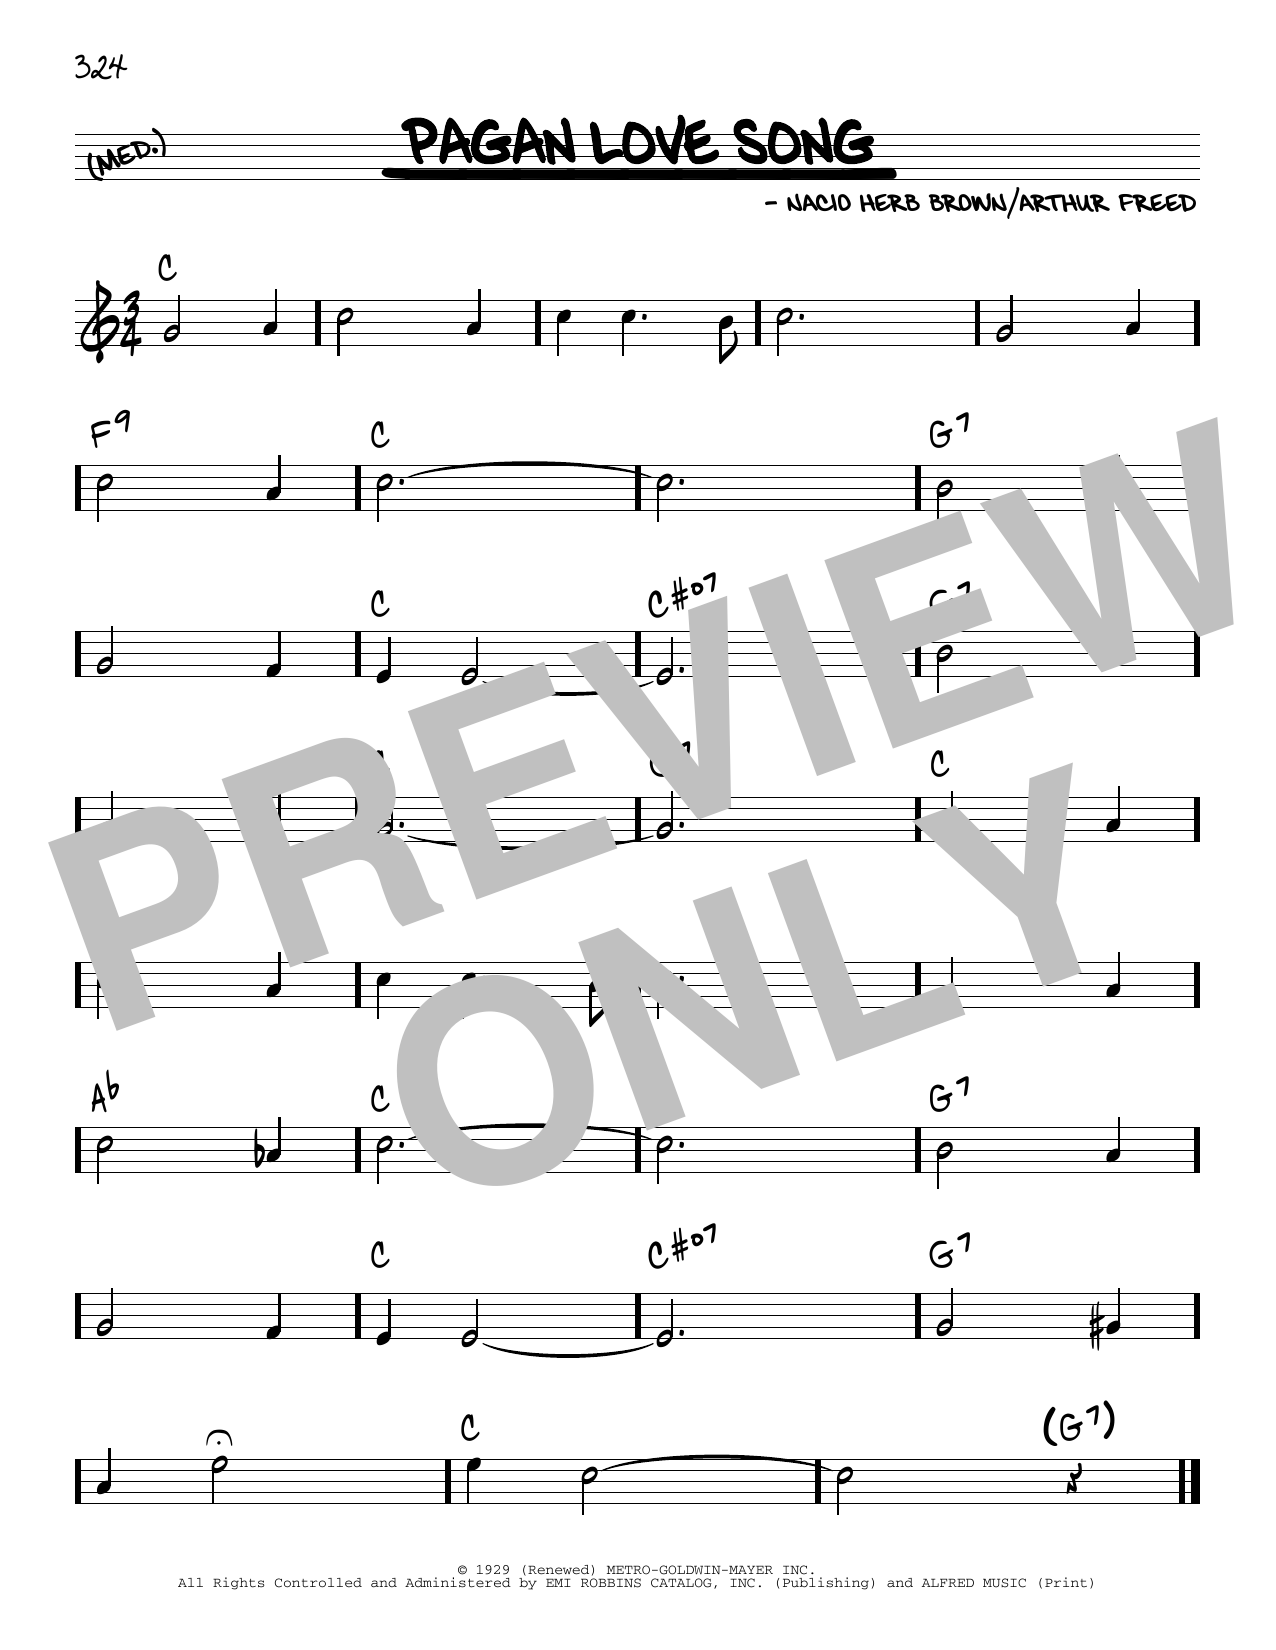 Arthur Freed and Nacio Herb Brown Pagan Love Song Sheet Music Notes & Chords for Real Book – Melody & Chords - Download or Print PDF